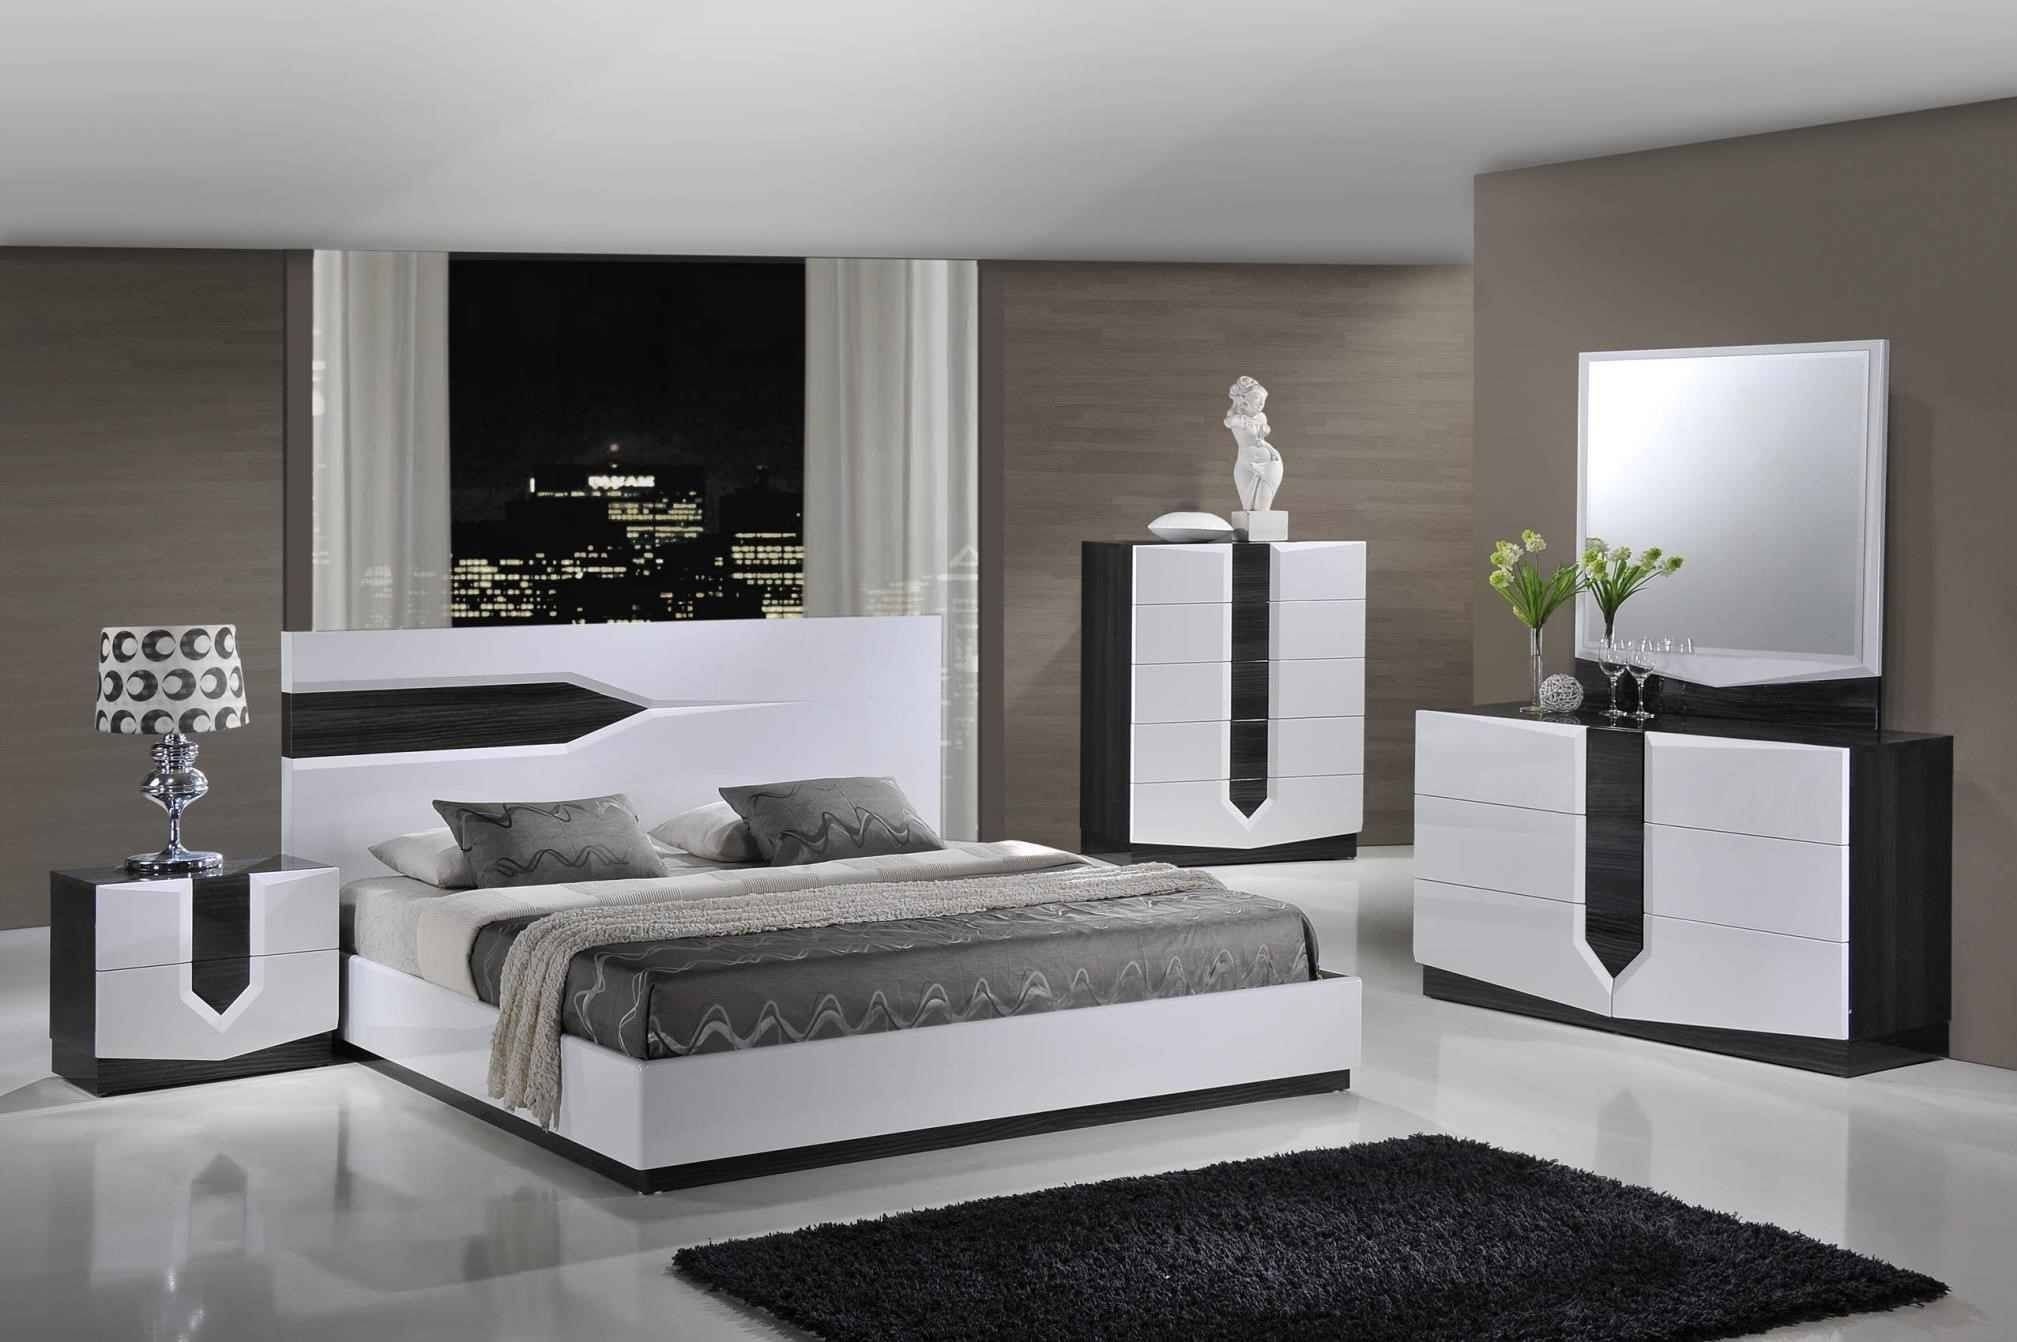 shiny black bedroom furniture